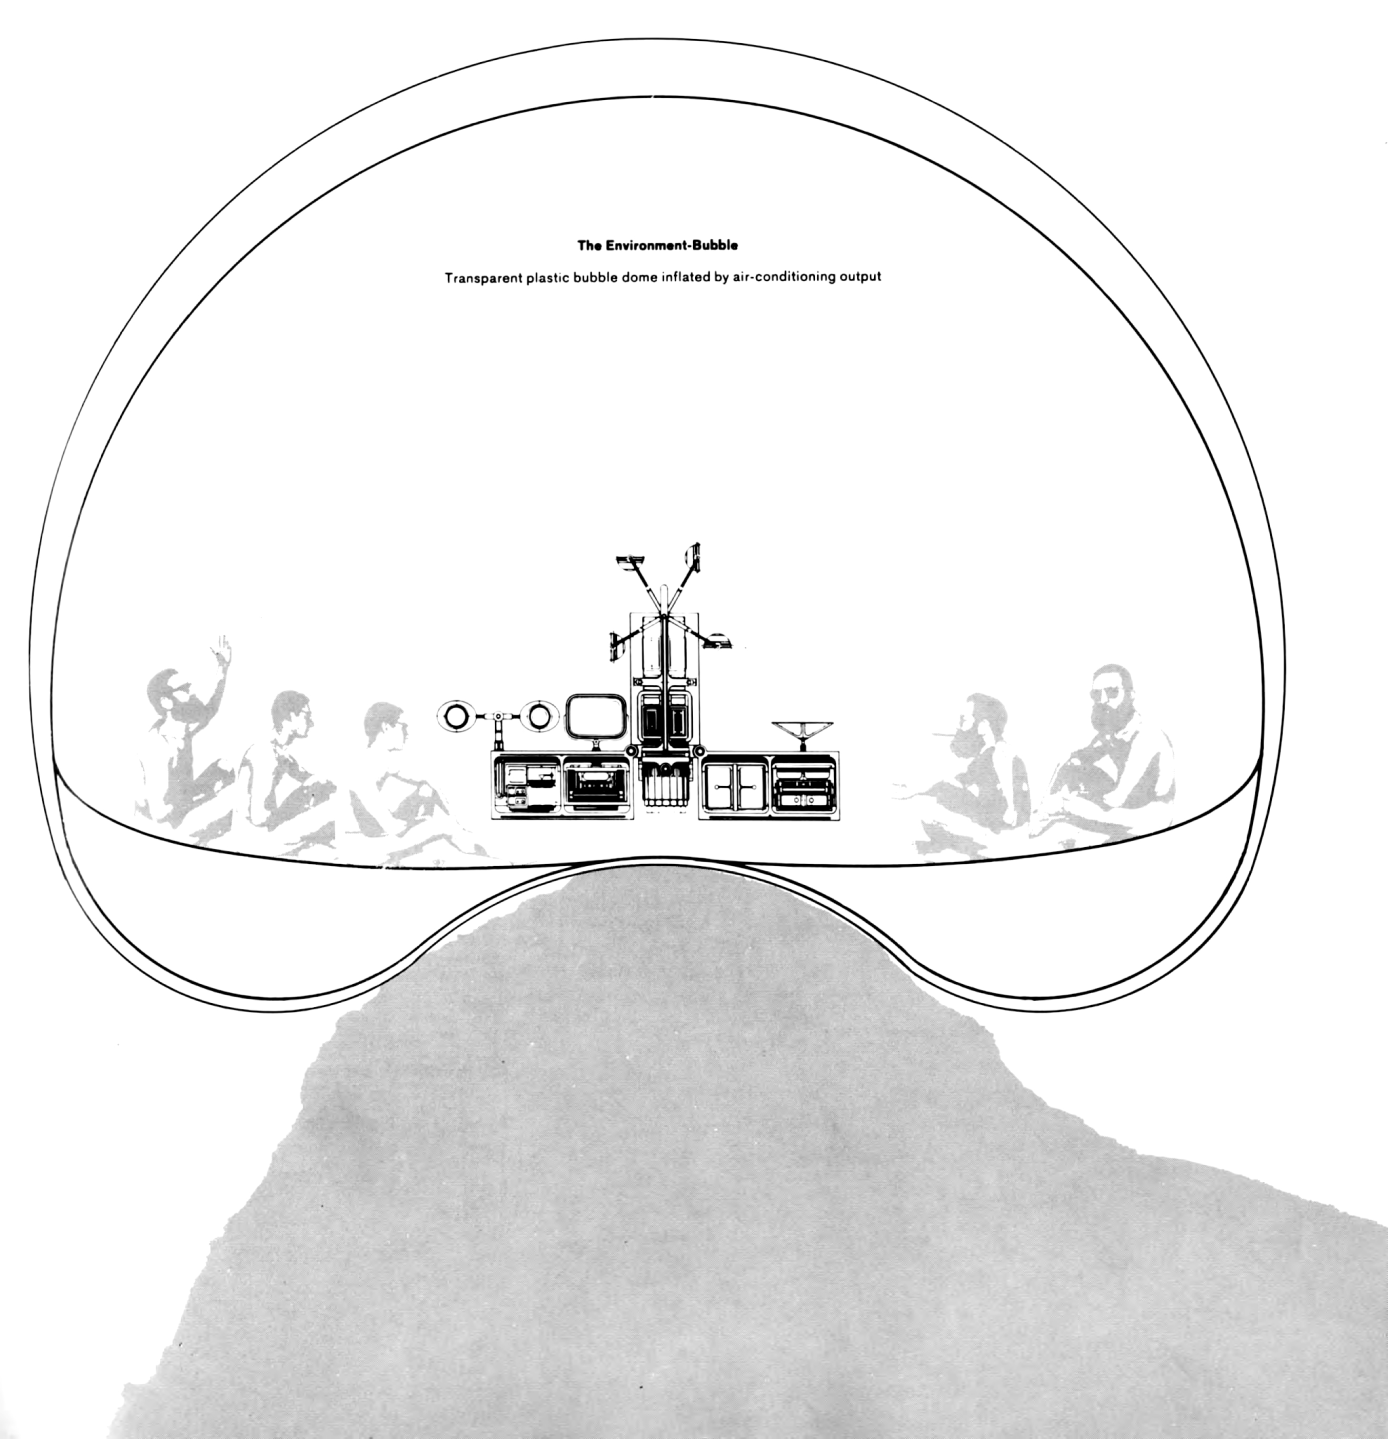 François Dallegret 为美国建筑批评家Reyner Banham文章“A Home Is Not a House”所做插图，1965